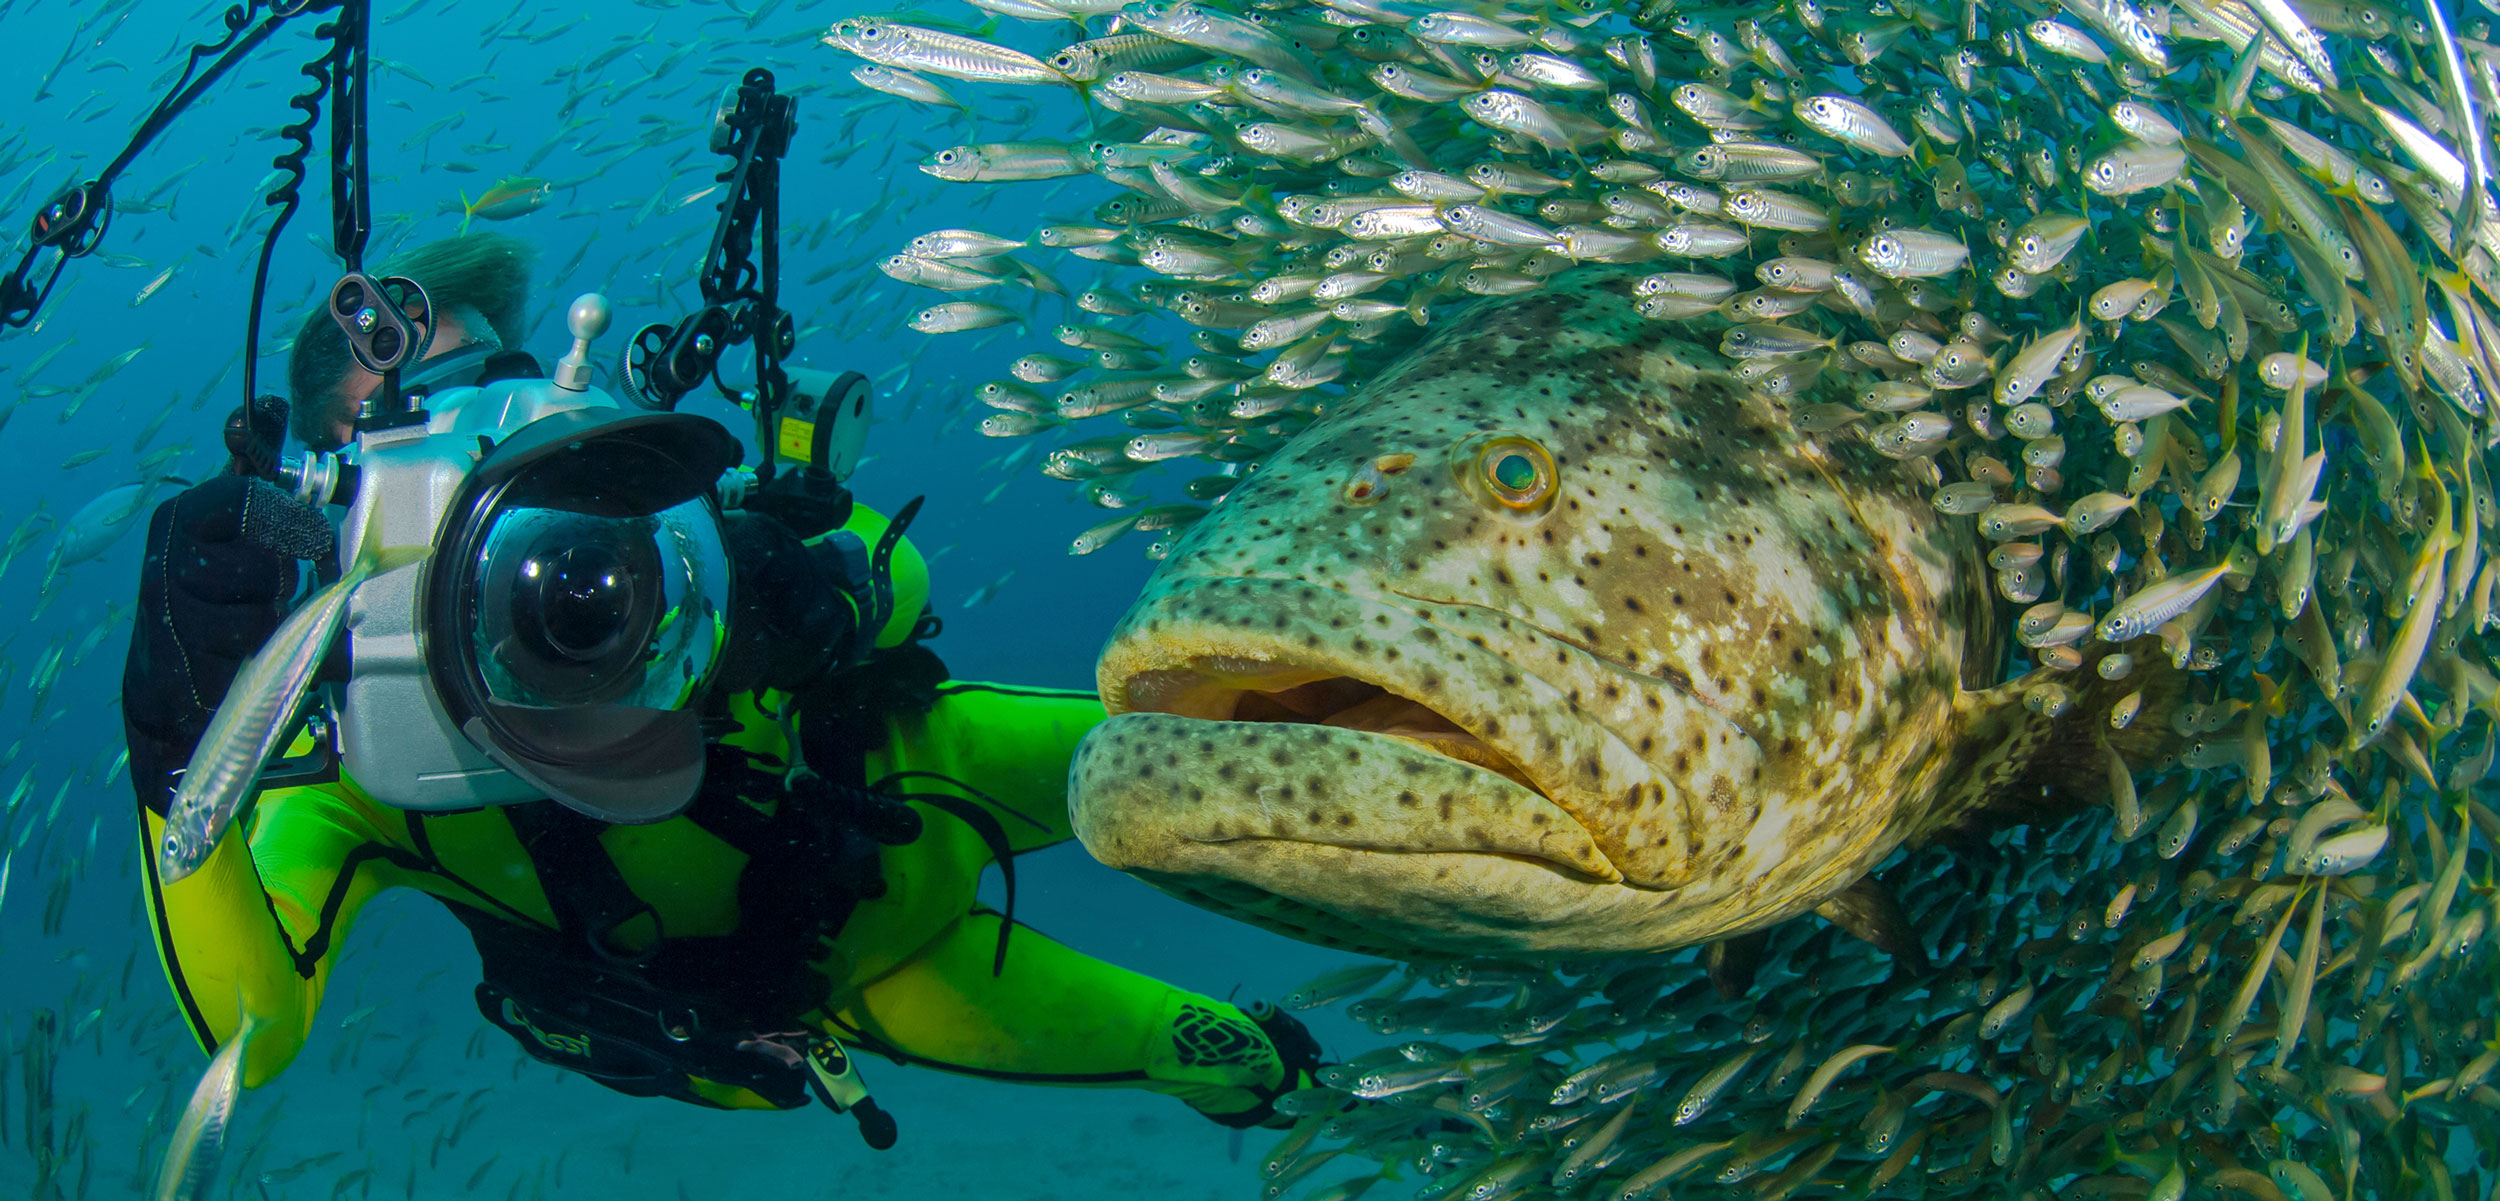 goliath grouper and diver